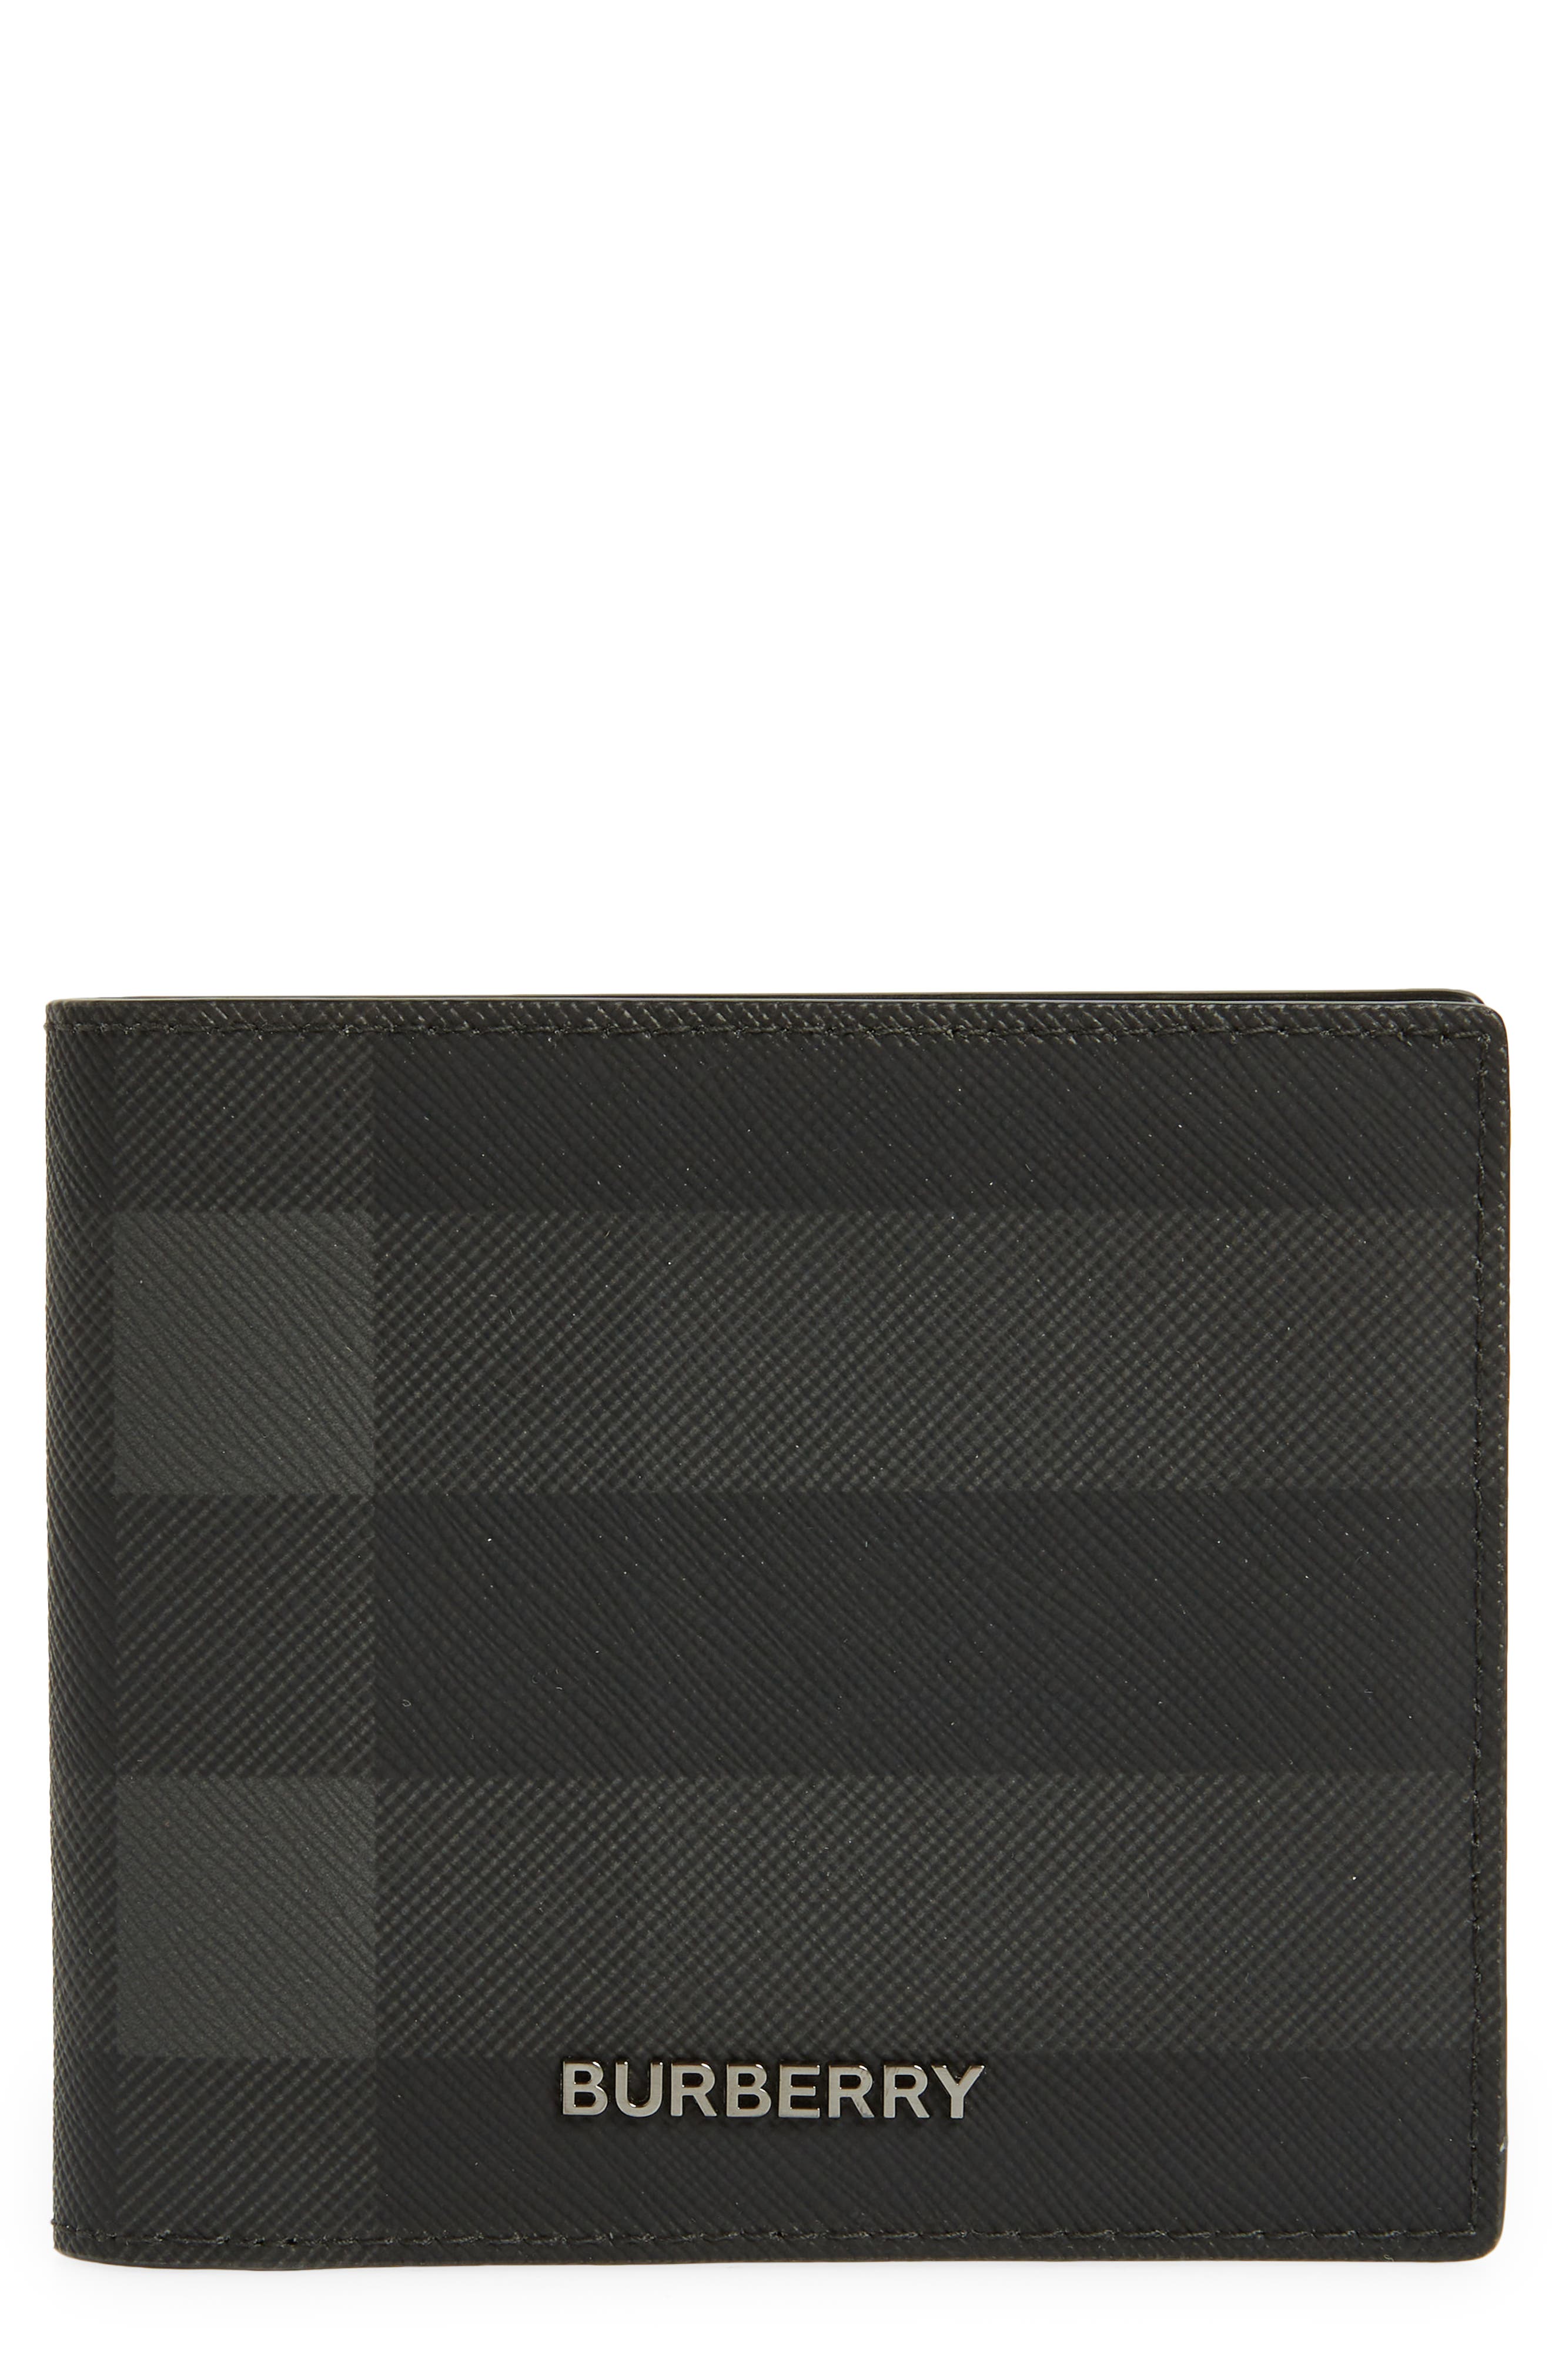 Men PU Leather Wallet Hot Black New Fashion  Design High Quality 